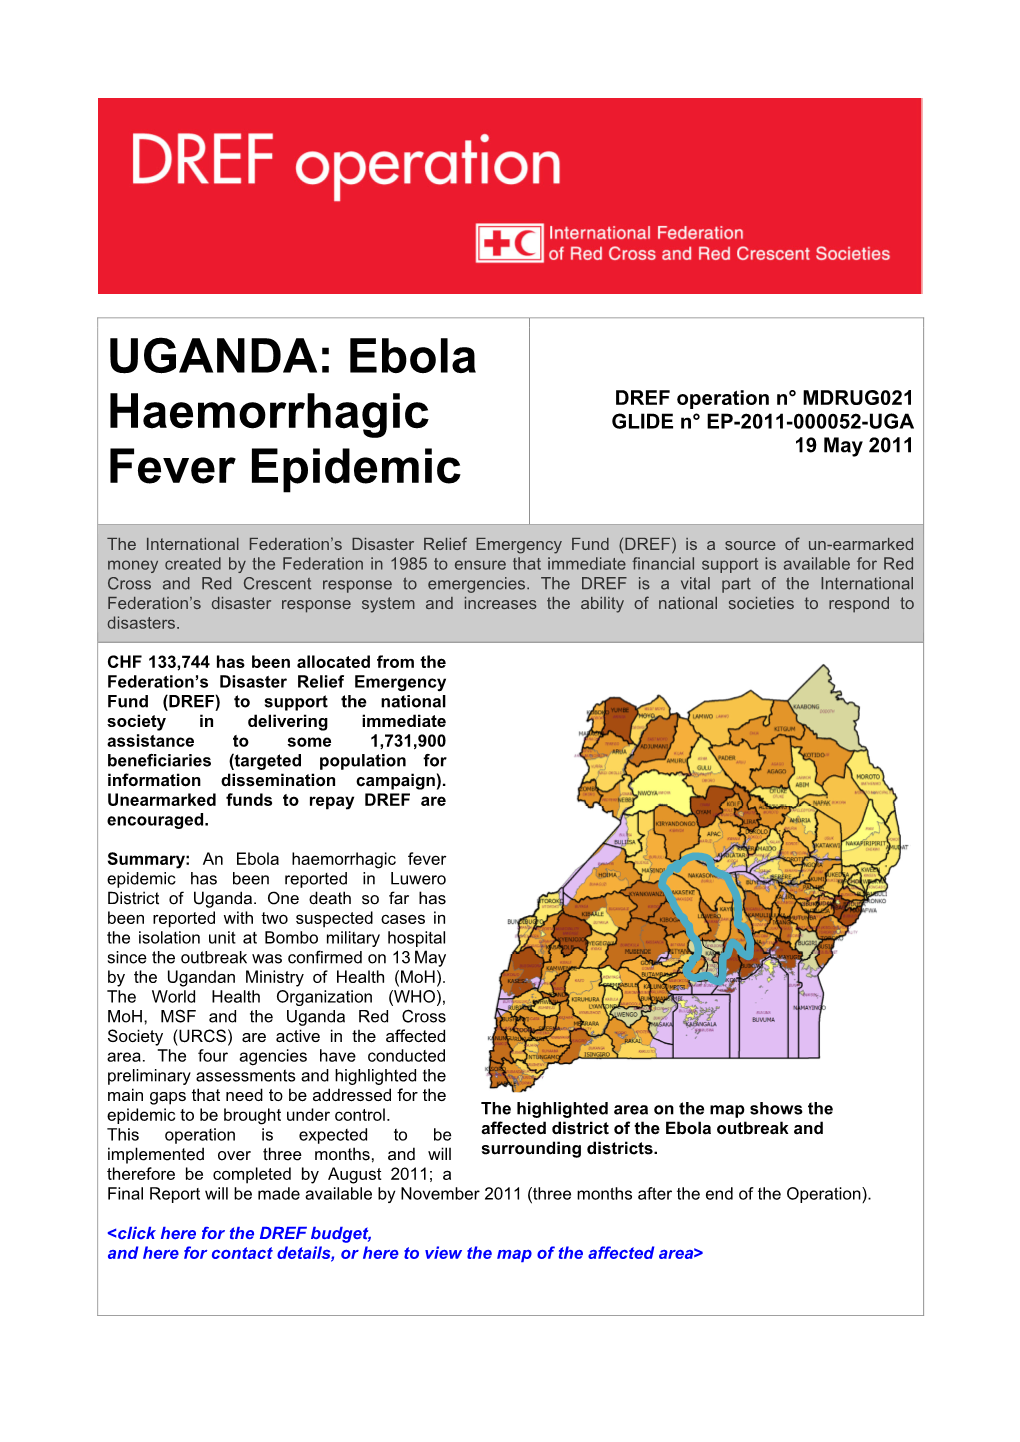 UGANDA: Ebola DREF Operation N° MDRUG021 Haemorrhagic GLIDE N° EP-2011-000052-UGA 19 May 2011 Fever Epidemic